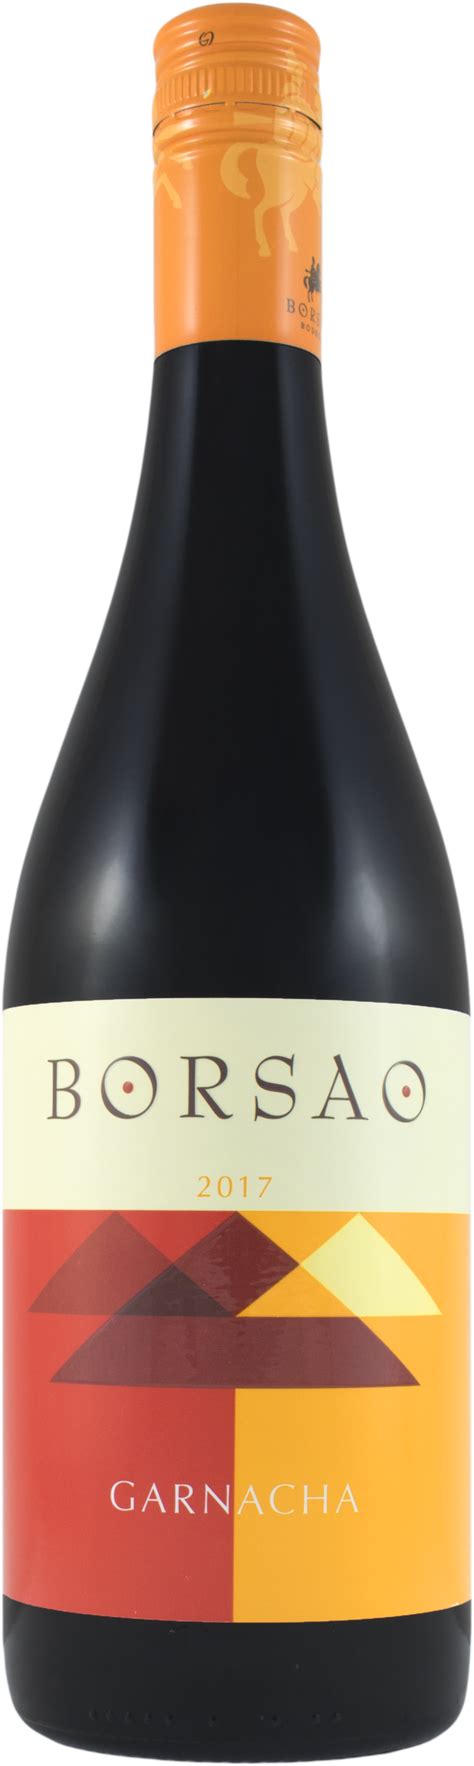 borsao wine